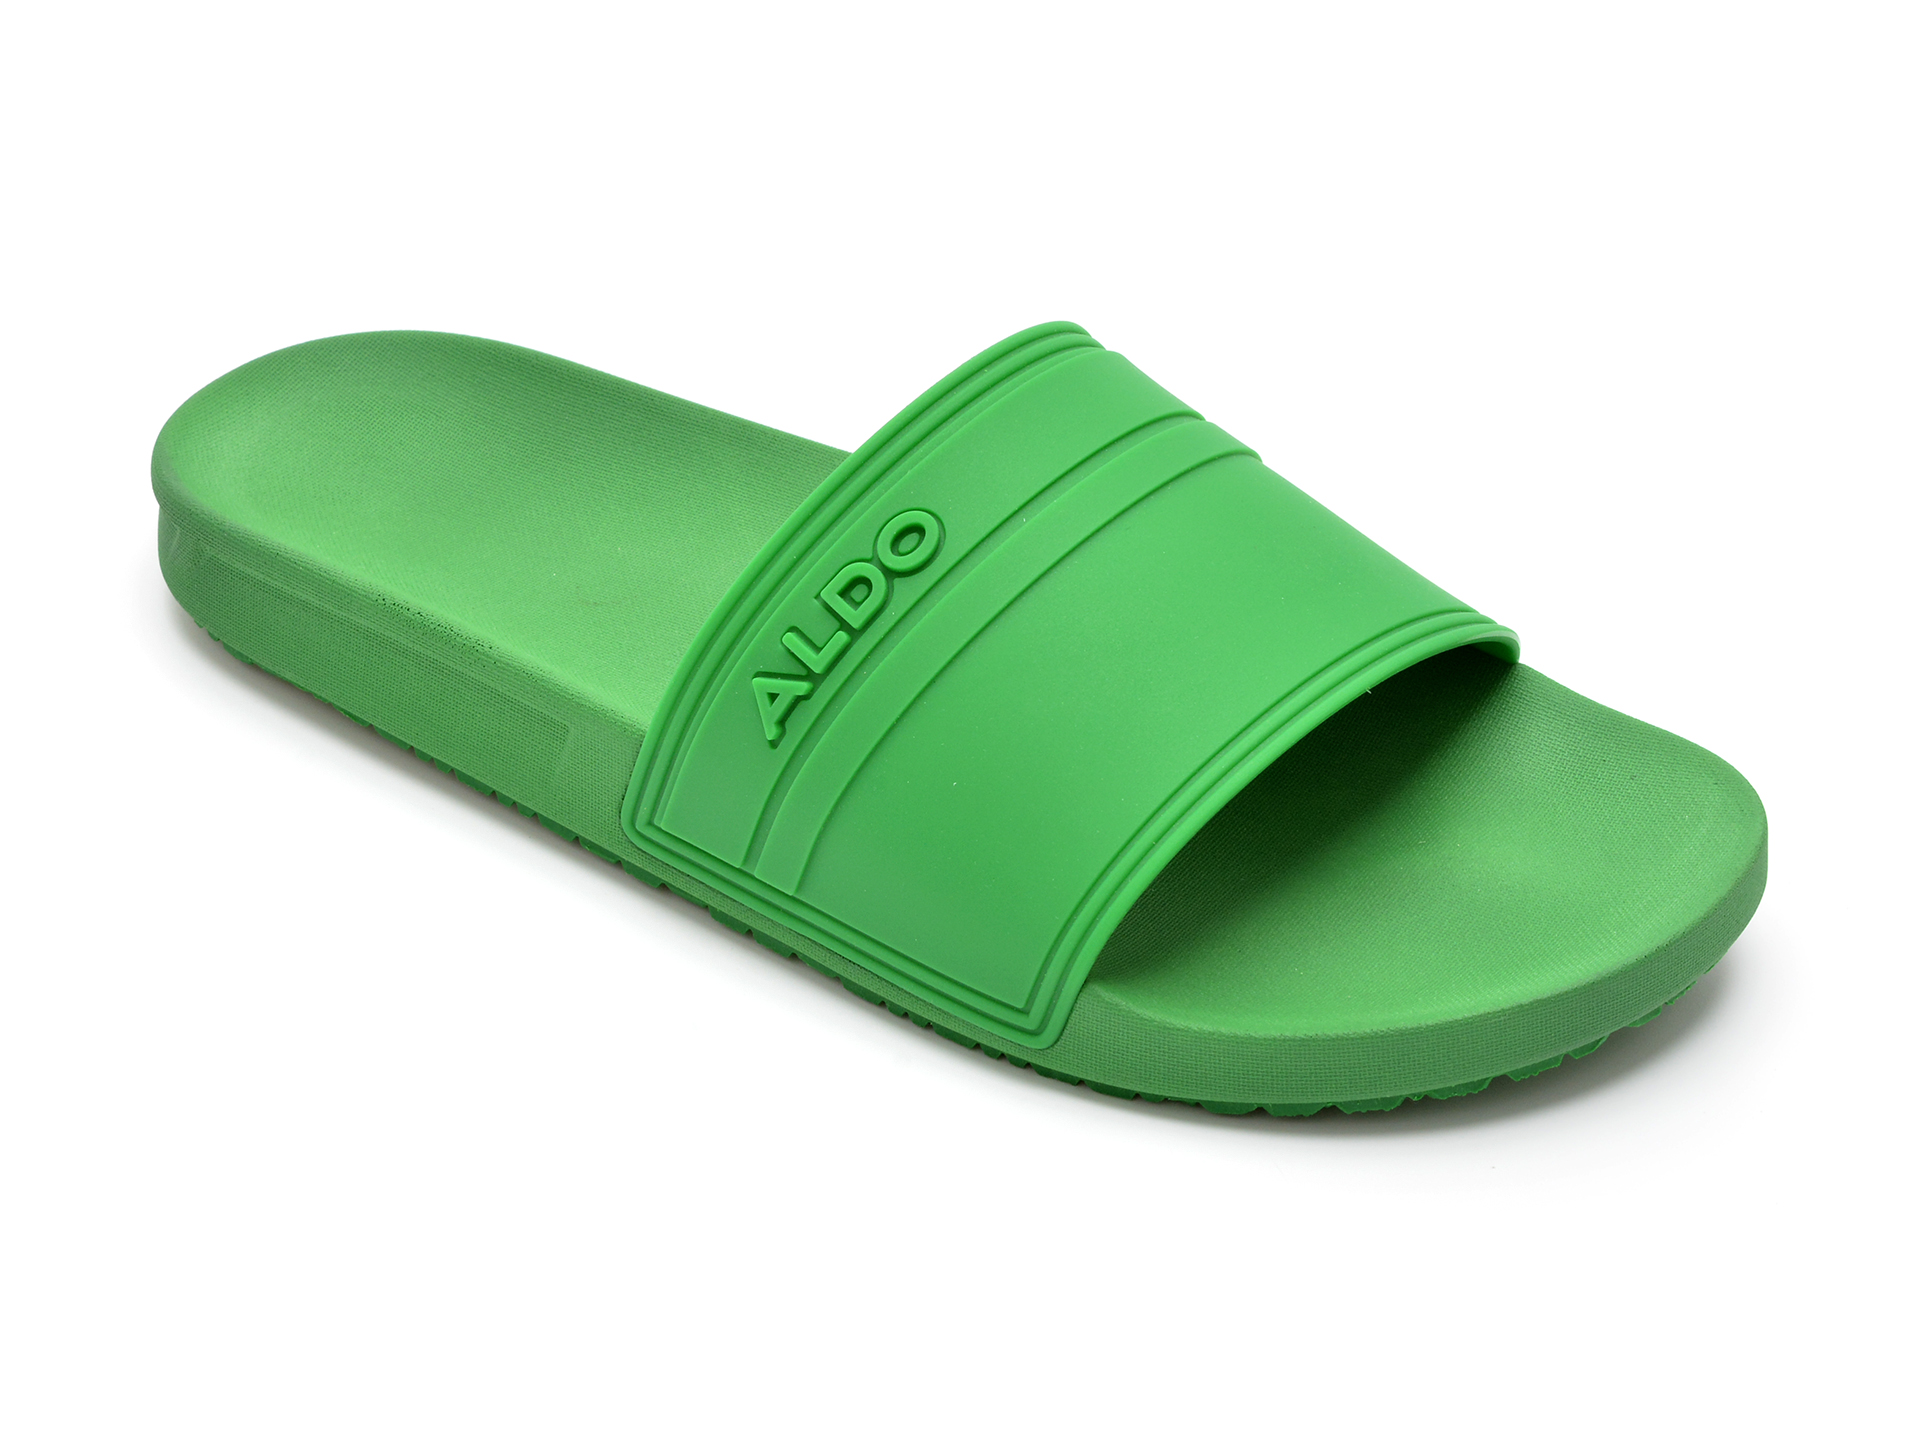 Papuci ALDO verzi, DINMORE300, din pvc Aldo